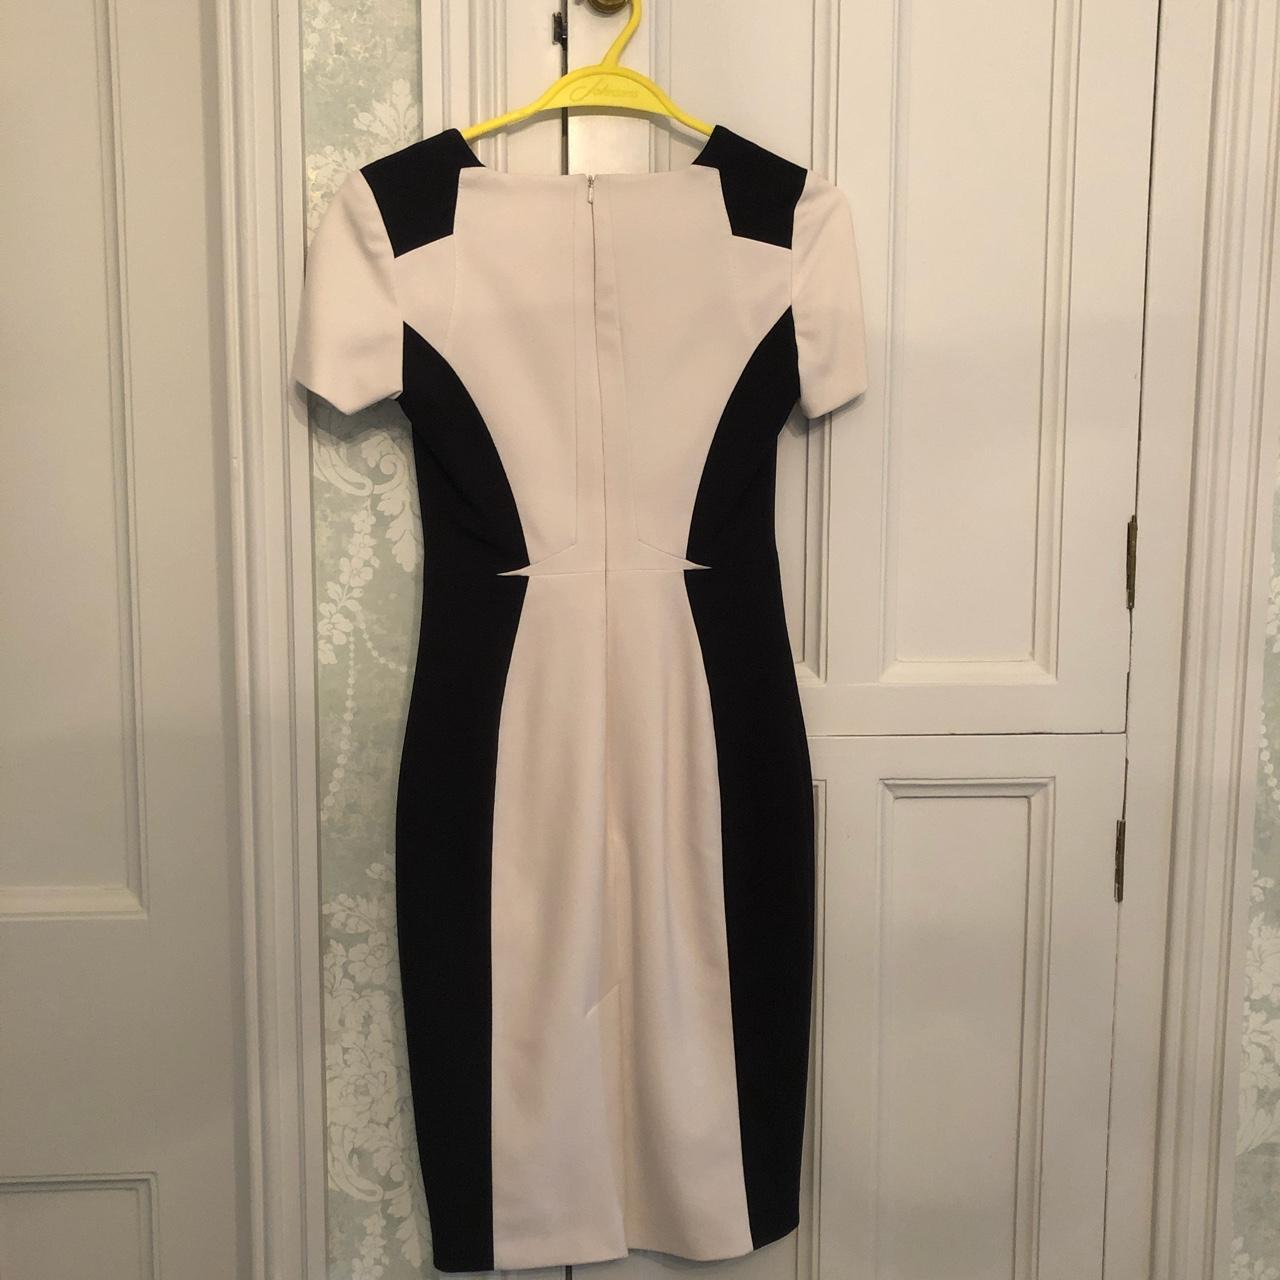 Karen Millen Evening Dress Like New Size 8 V Neck... - Depop